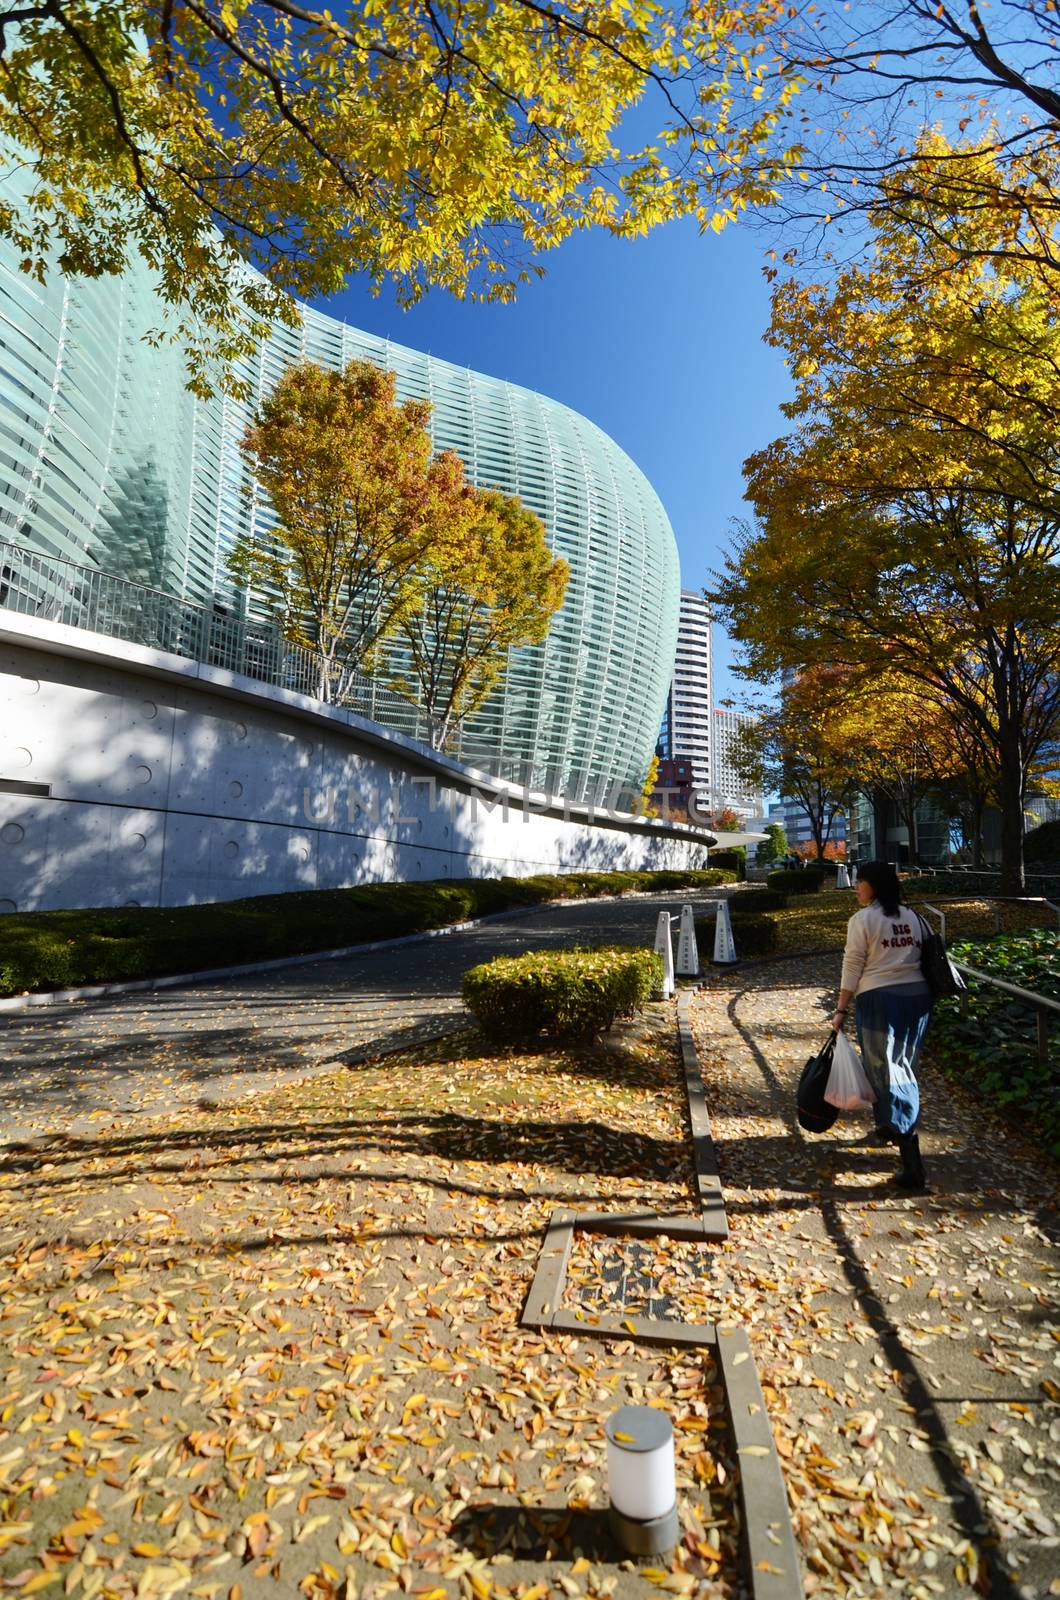 Tokyo, Japan - November 23, 2013: People visit National Art Center in Tokyo by siraanamwong